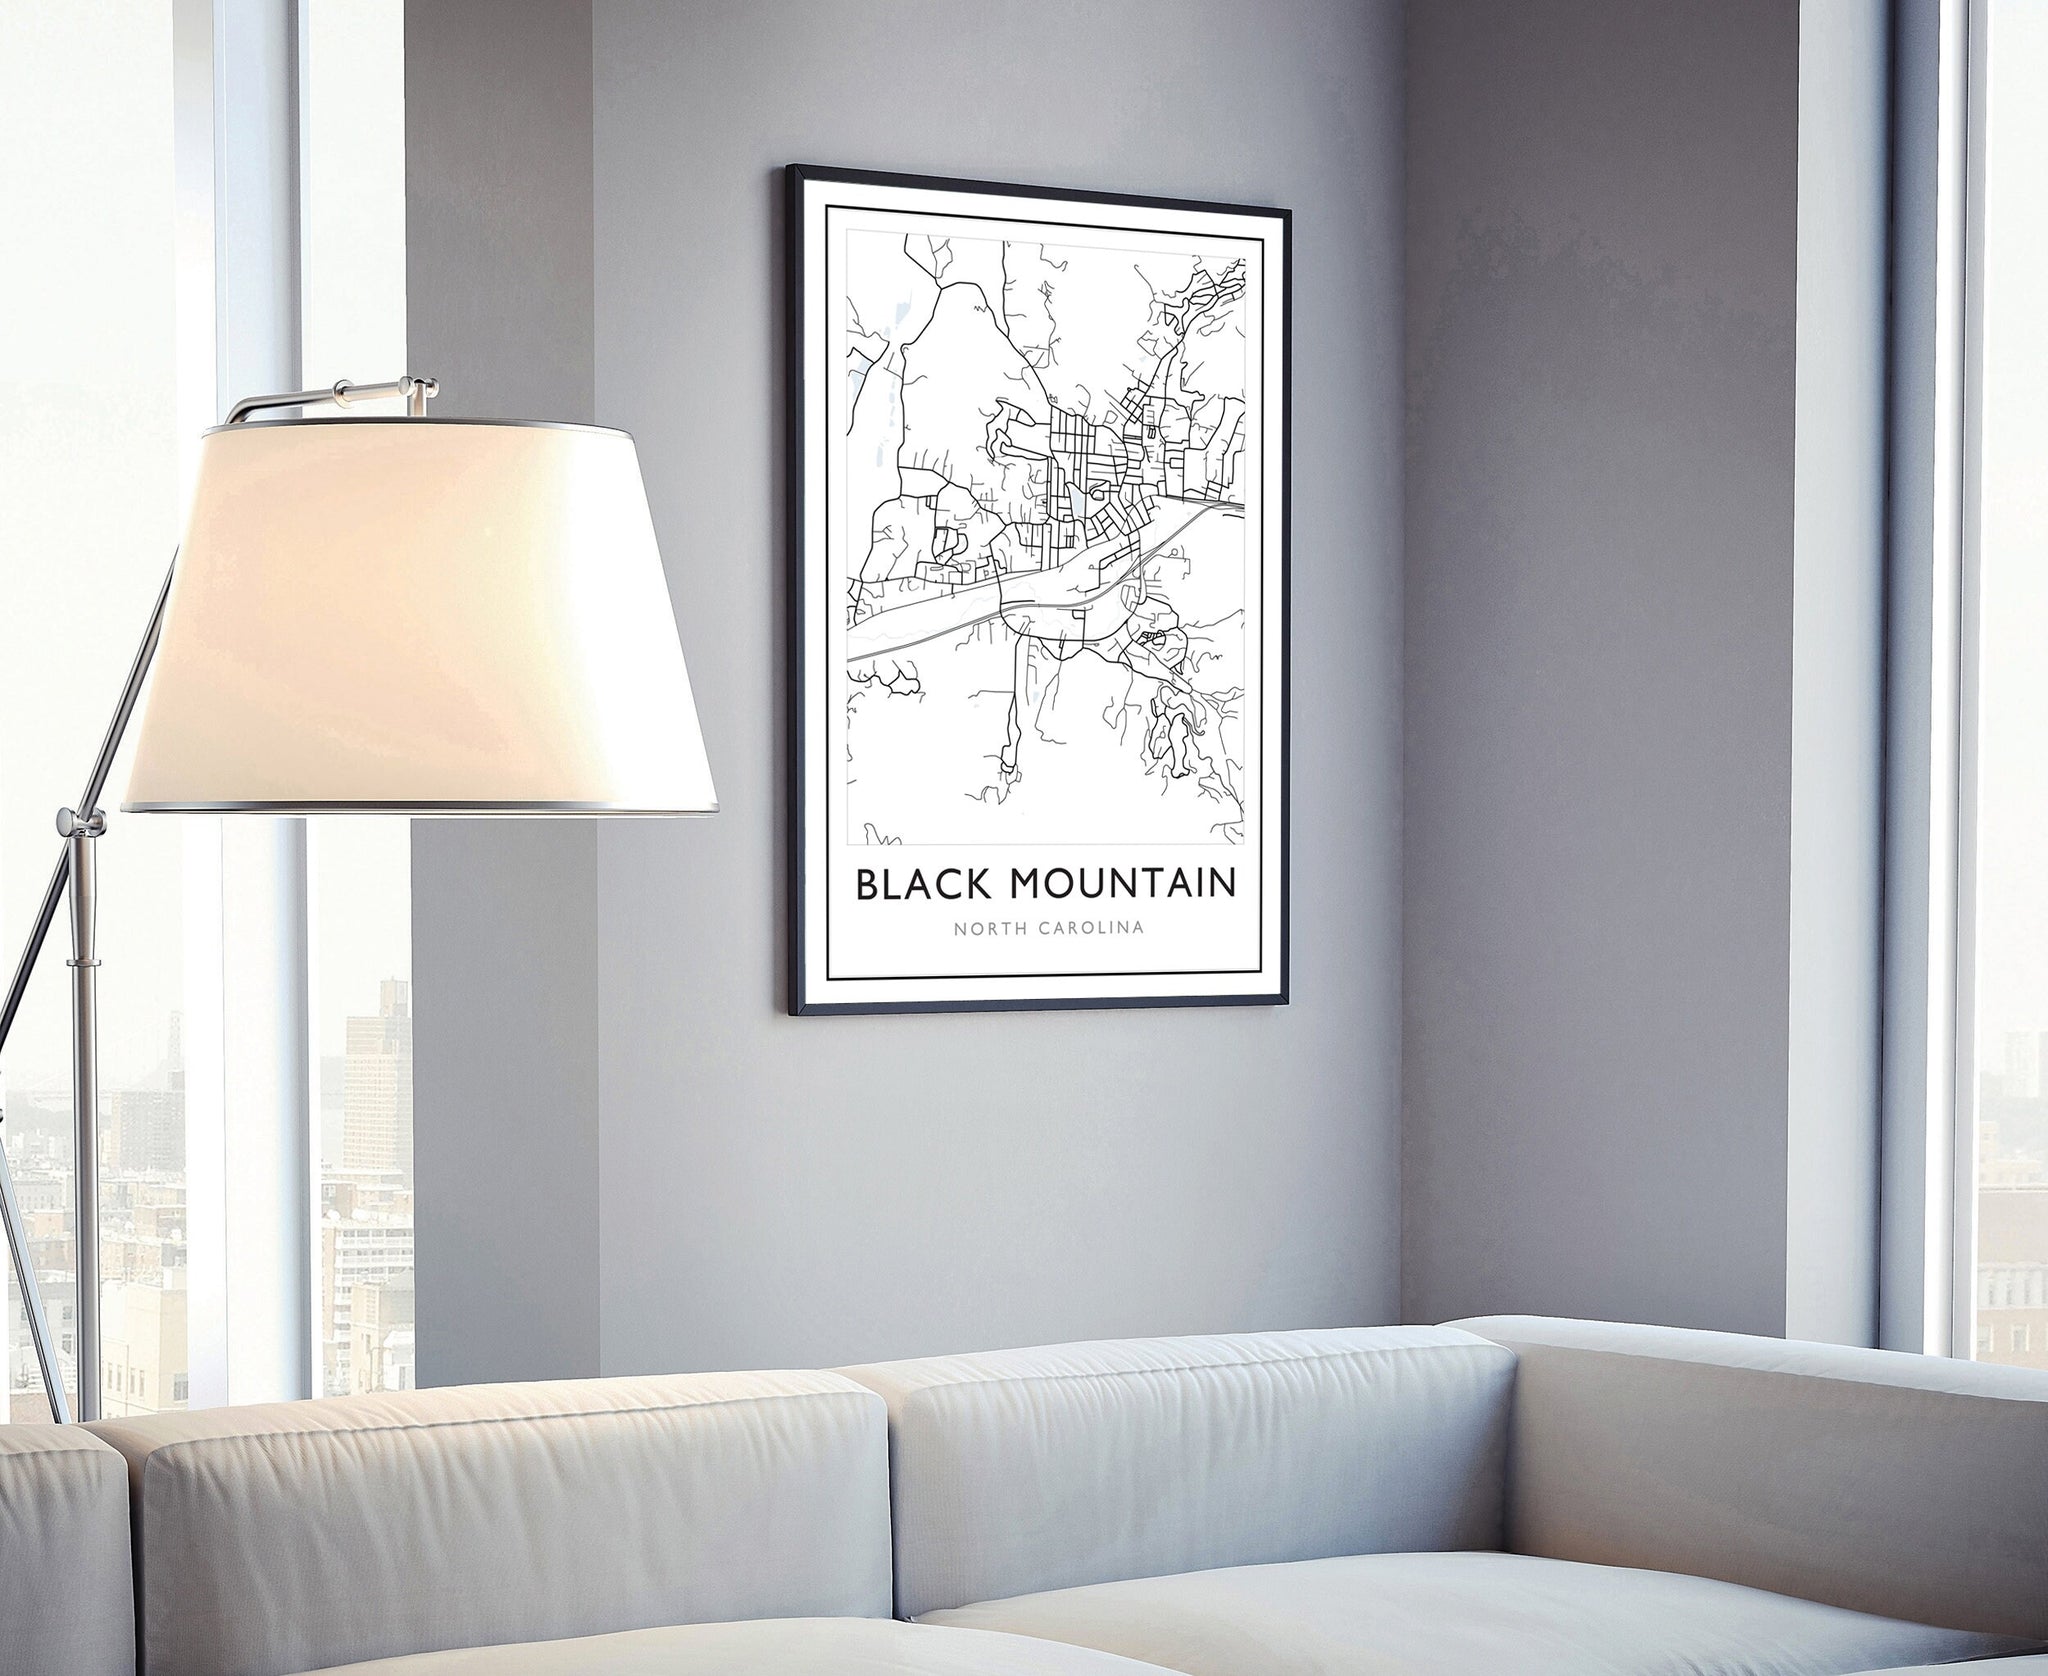 Black Mountain Map, Black Mountain City Road Map , Black Mountain North Carolina Street Map, Modern US City Map, Home Decor, Office Wall Art